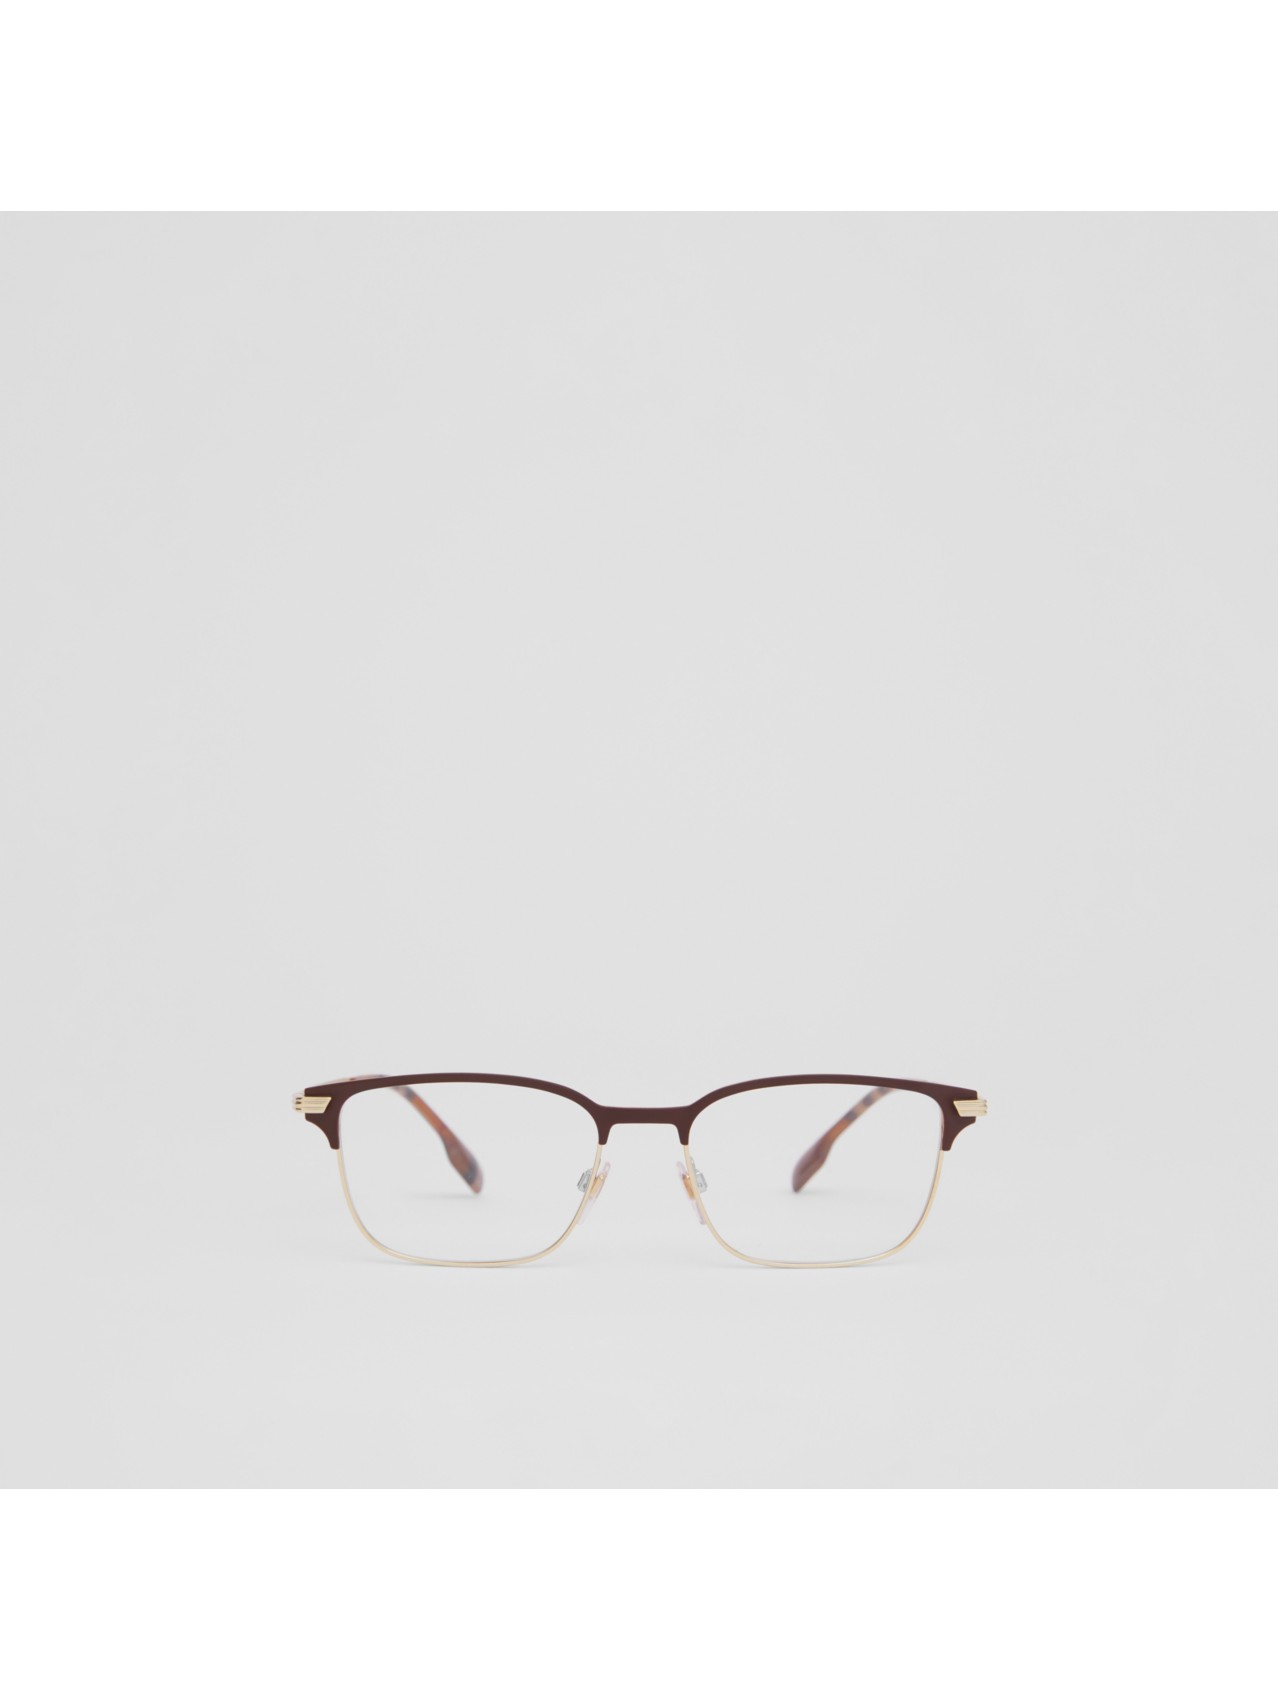 Men’s Designer Eyewear | Opticals & Sunglasses | Burberry® Official